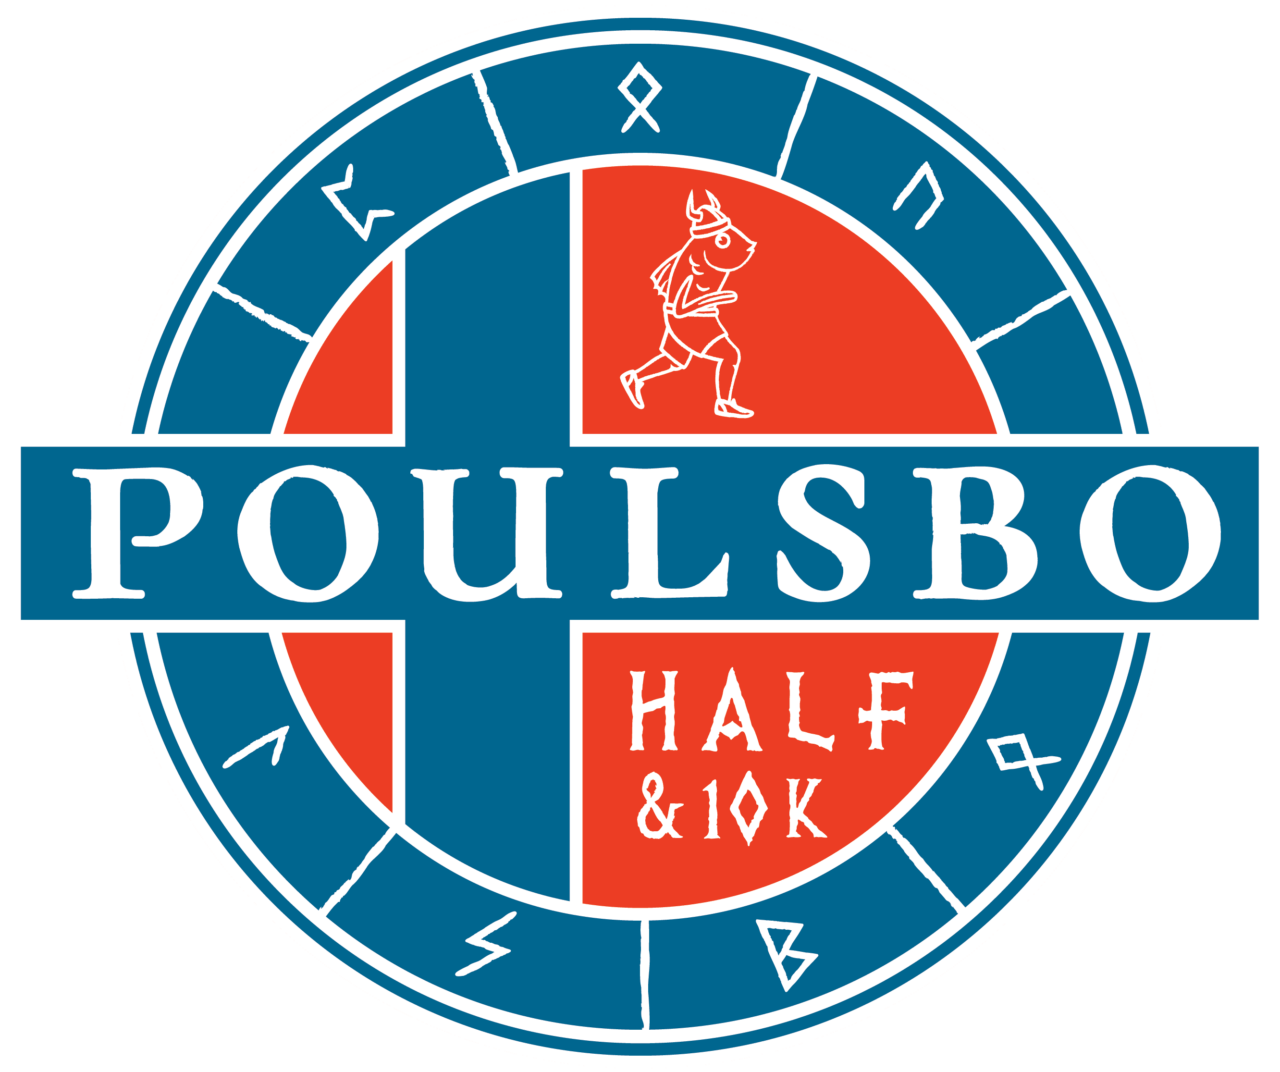 Poulsbo Half Marathon & 10k VISIT Poulsbo